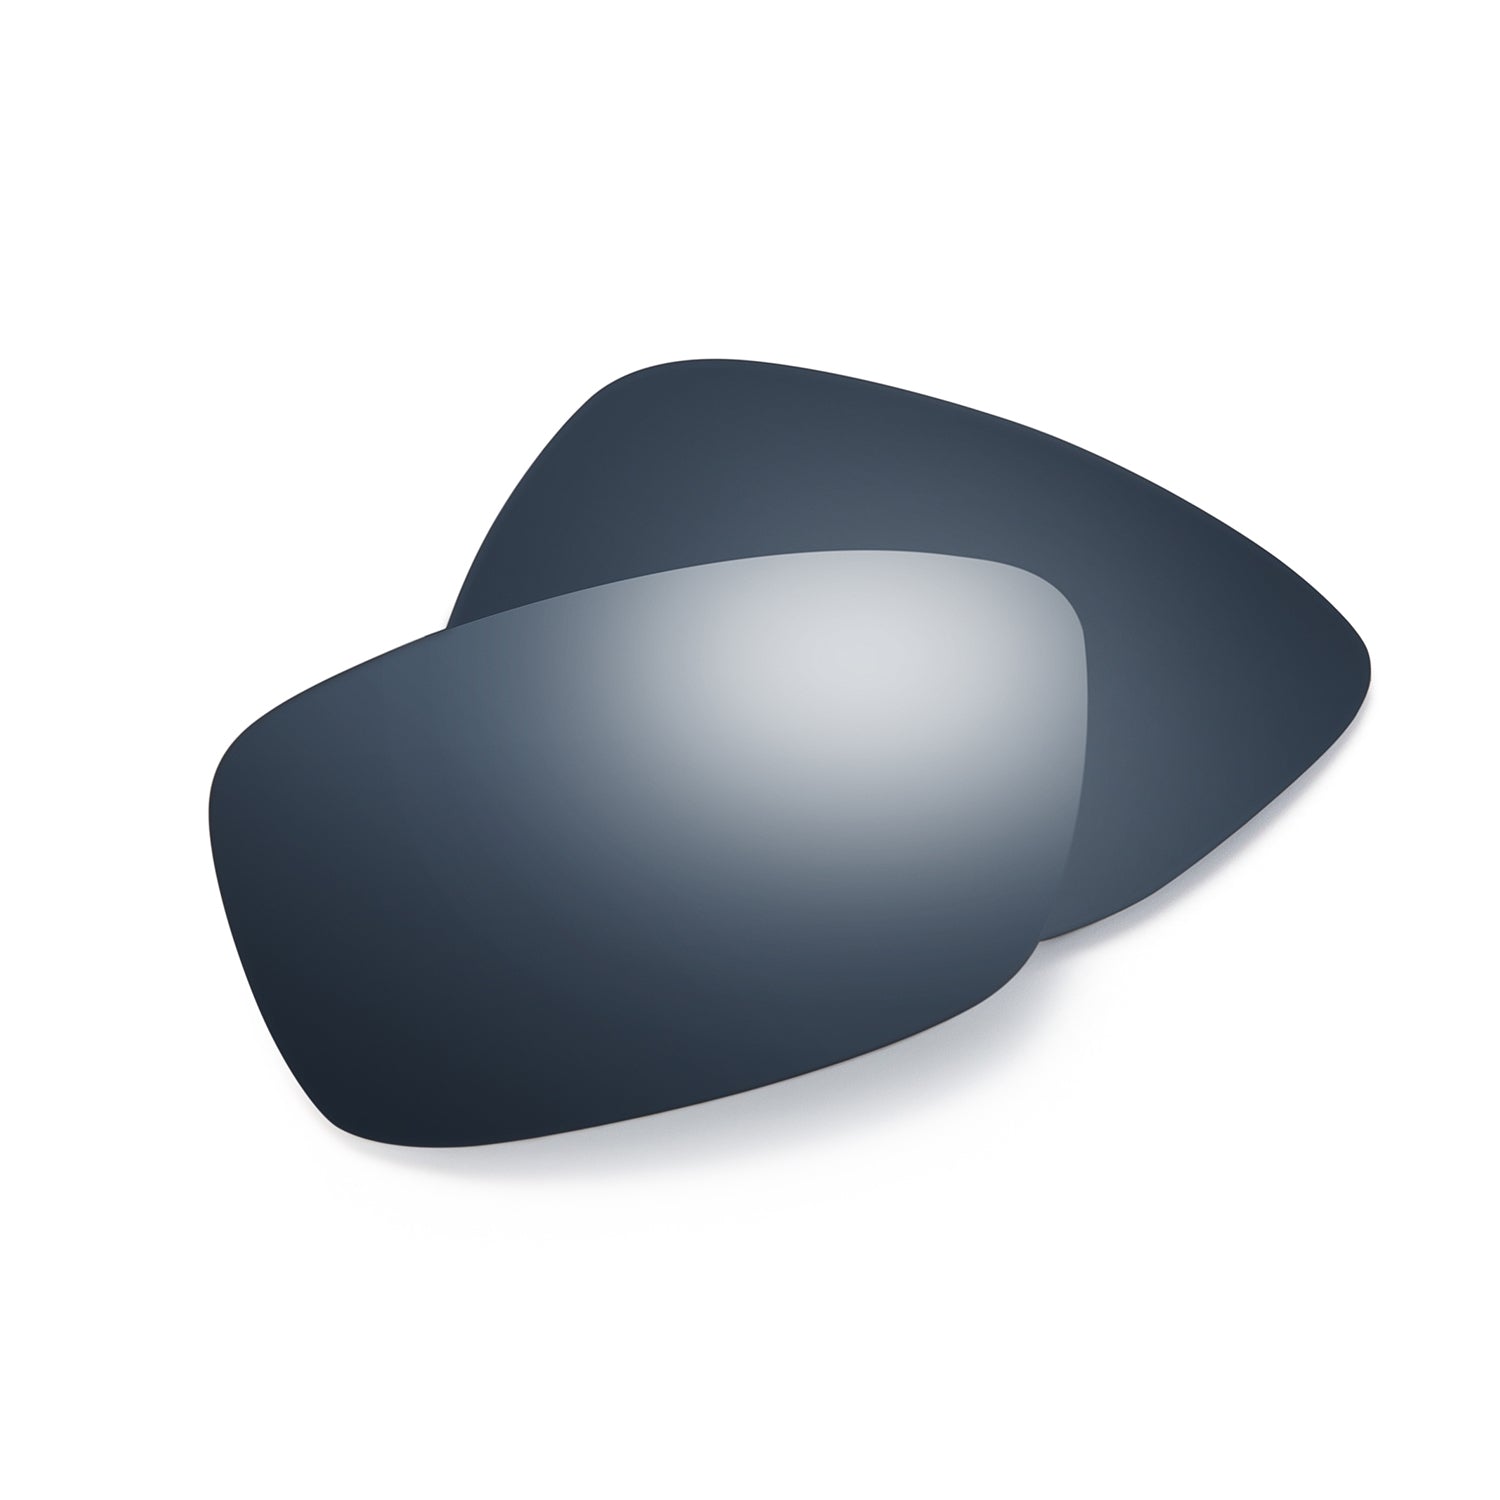 Interchangeable Lenses For Bluetooth Glasses